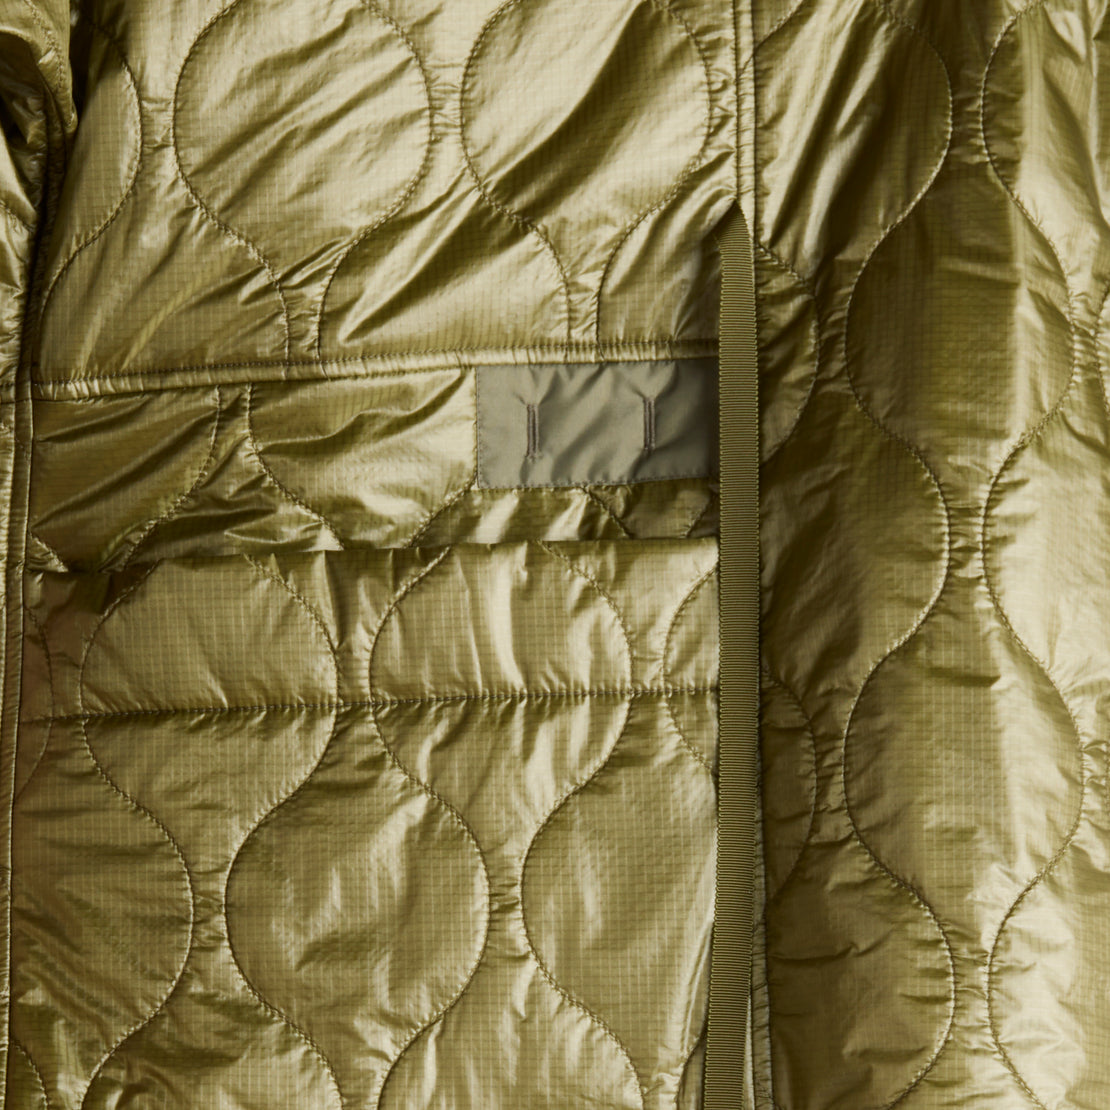 Nylon Quilting Lining RING Coat - Khaki - Kapital - STAG Provisions - W - Outerwear - Coat/Jacket